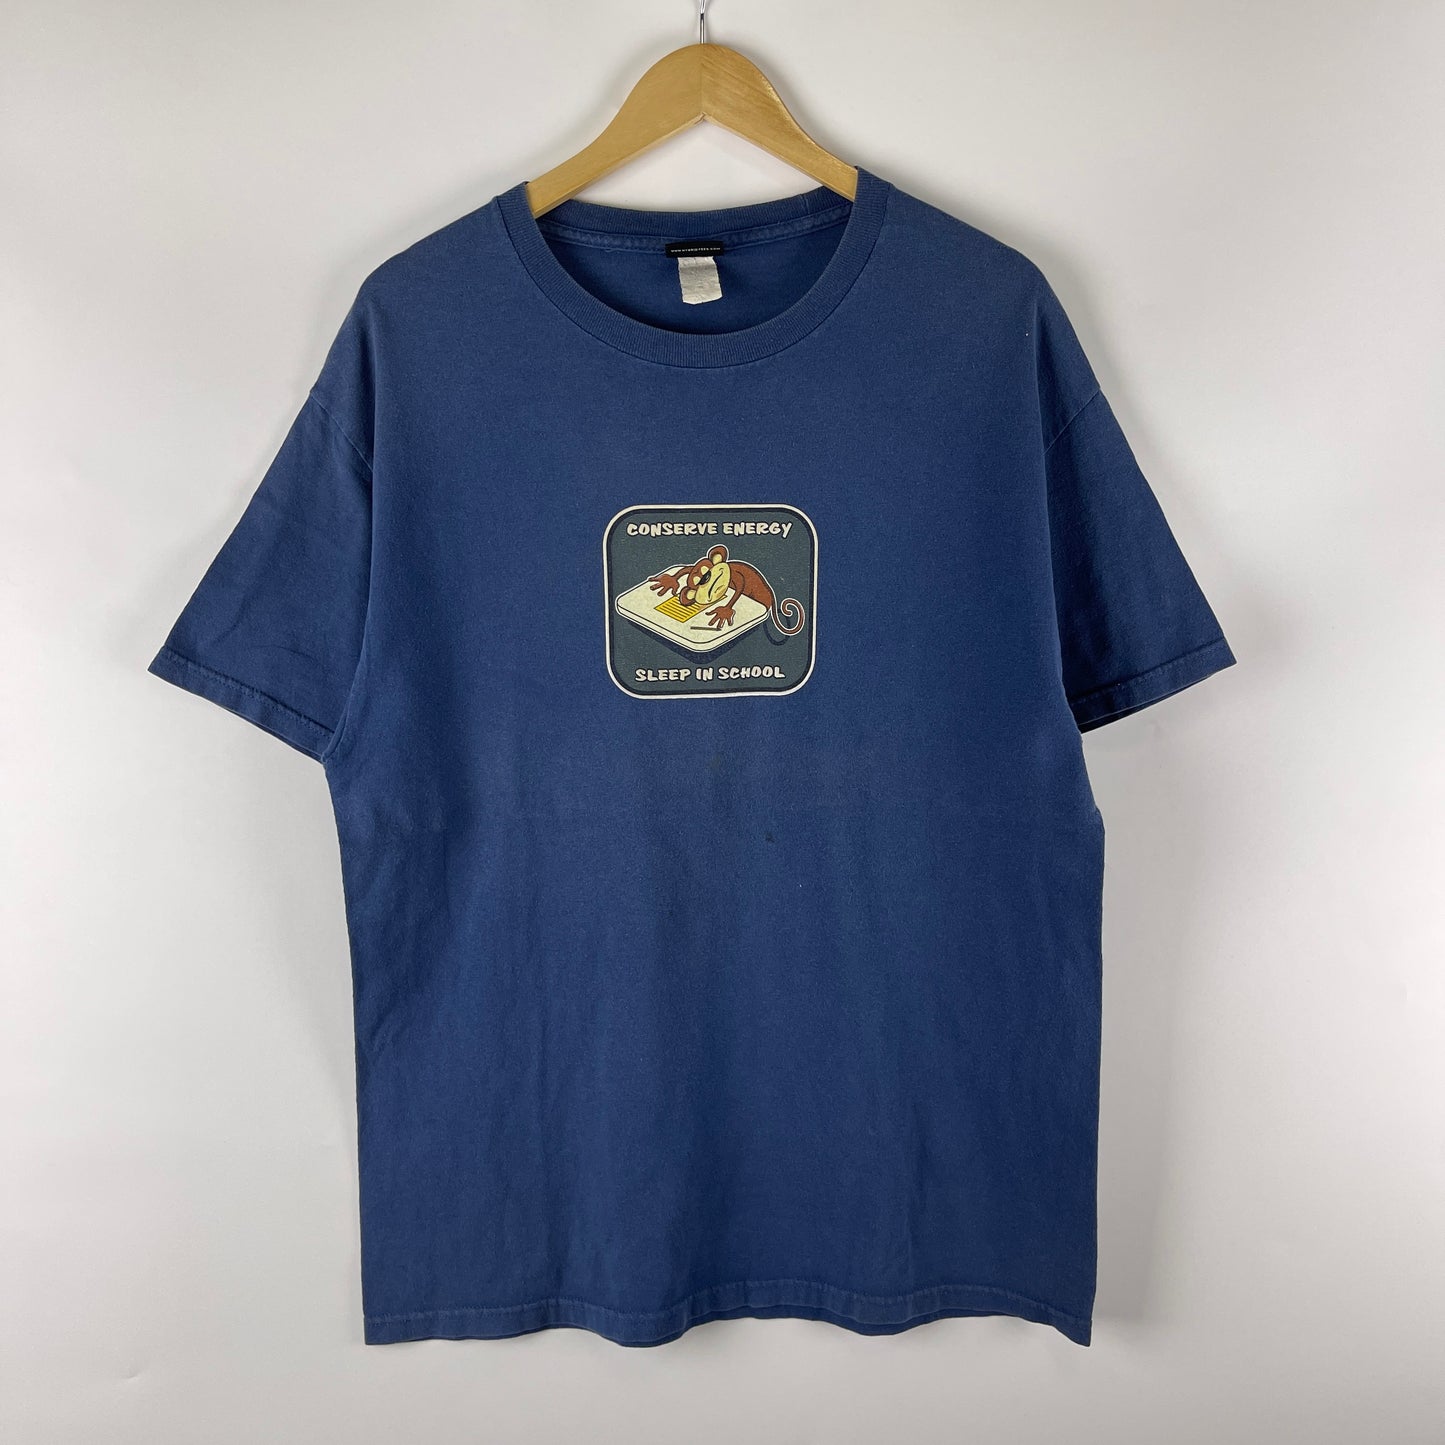 Vintage Conserve Energy Sleep in school 90's Skateboard style T-shirt